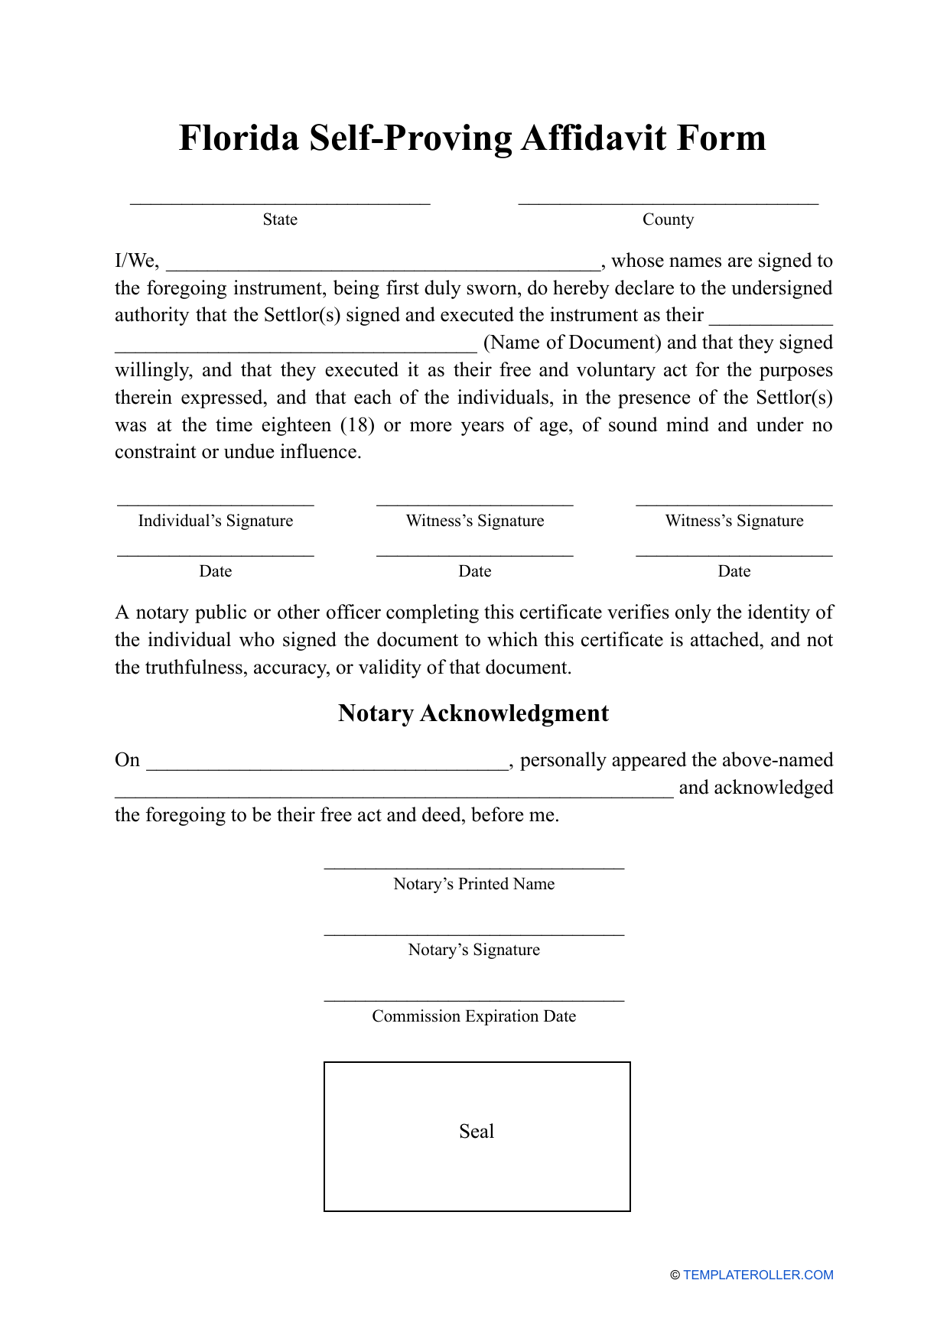 Self-proving Affidavit Form - Florida, Page 1